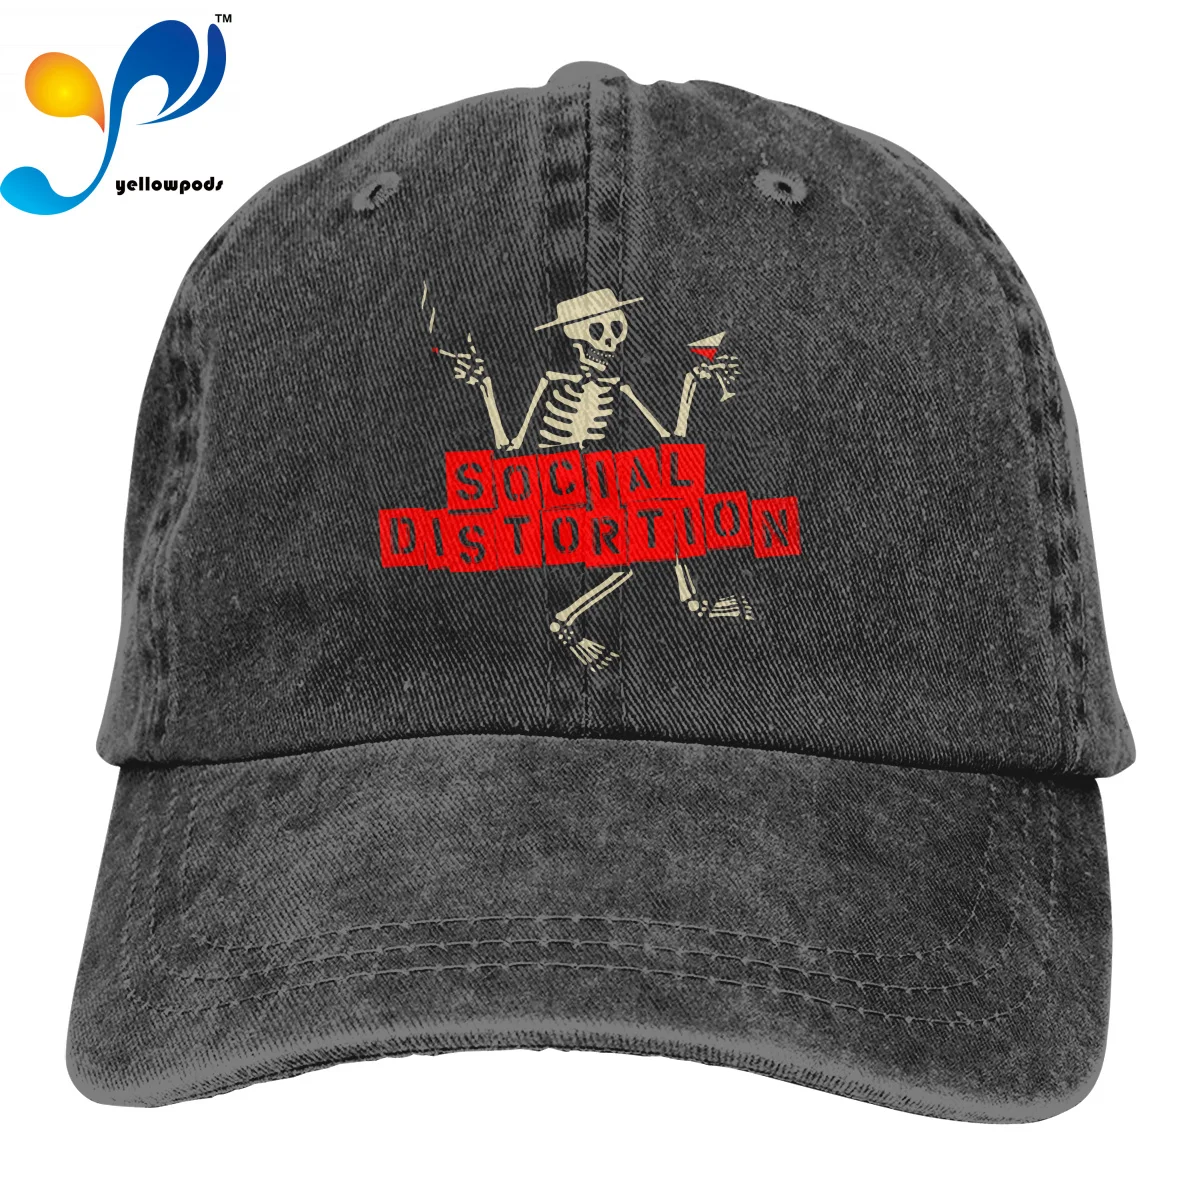 

Social Distortion New Baseball Hat Cap Women And Men Fashion Visor Adjustable Hip Hop Hat